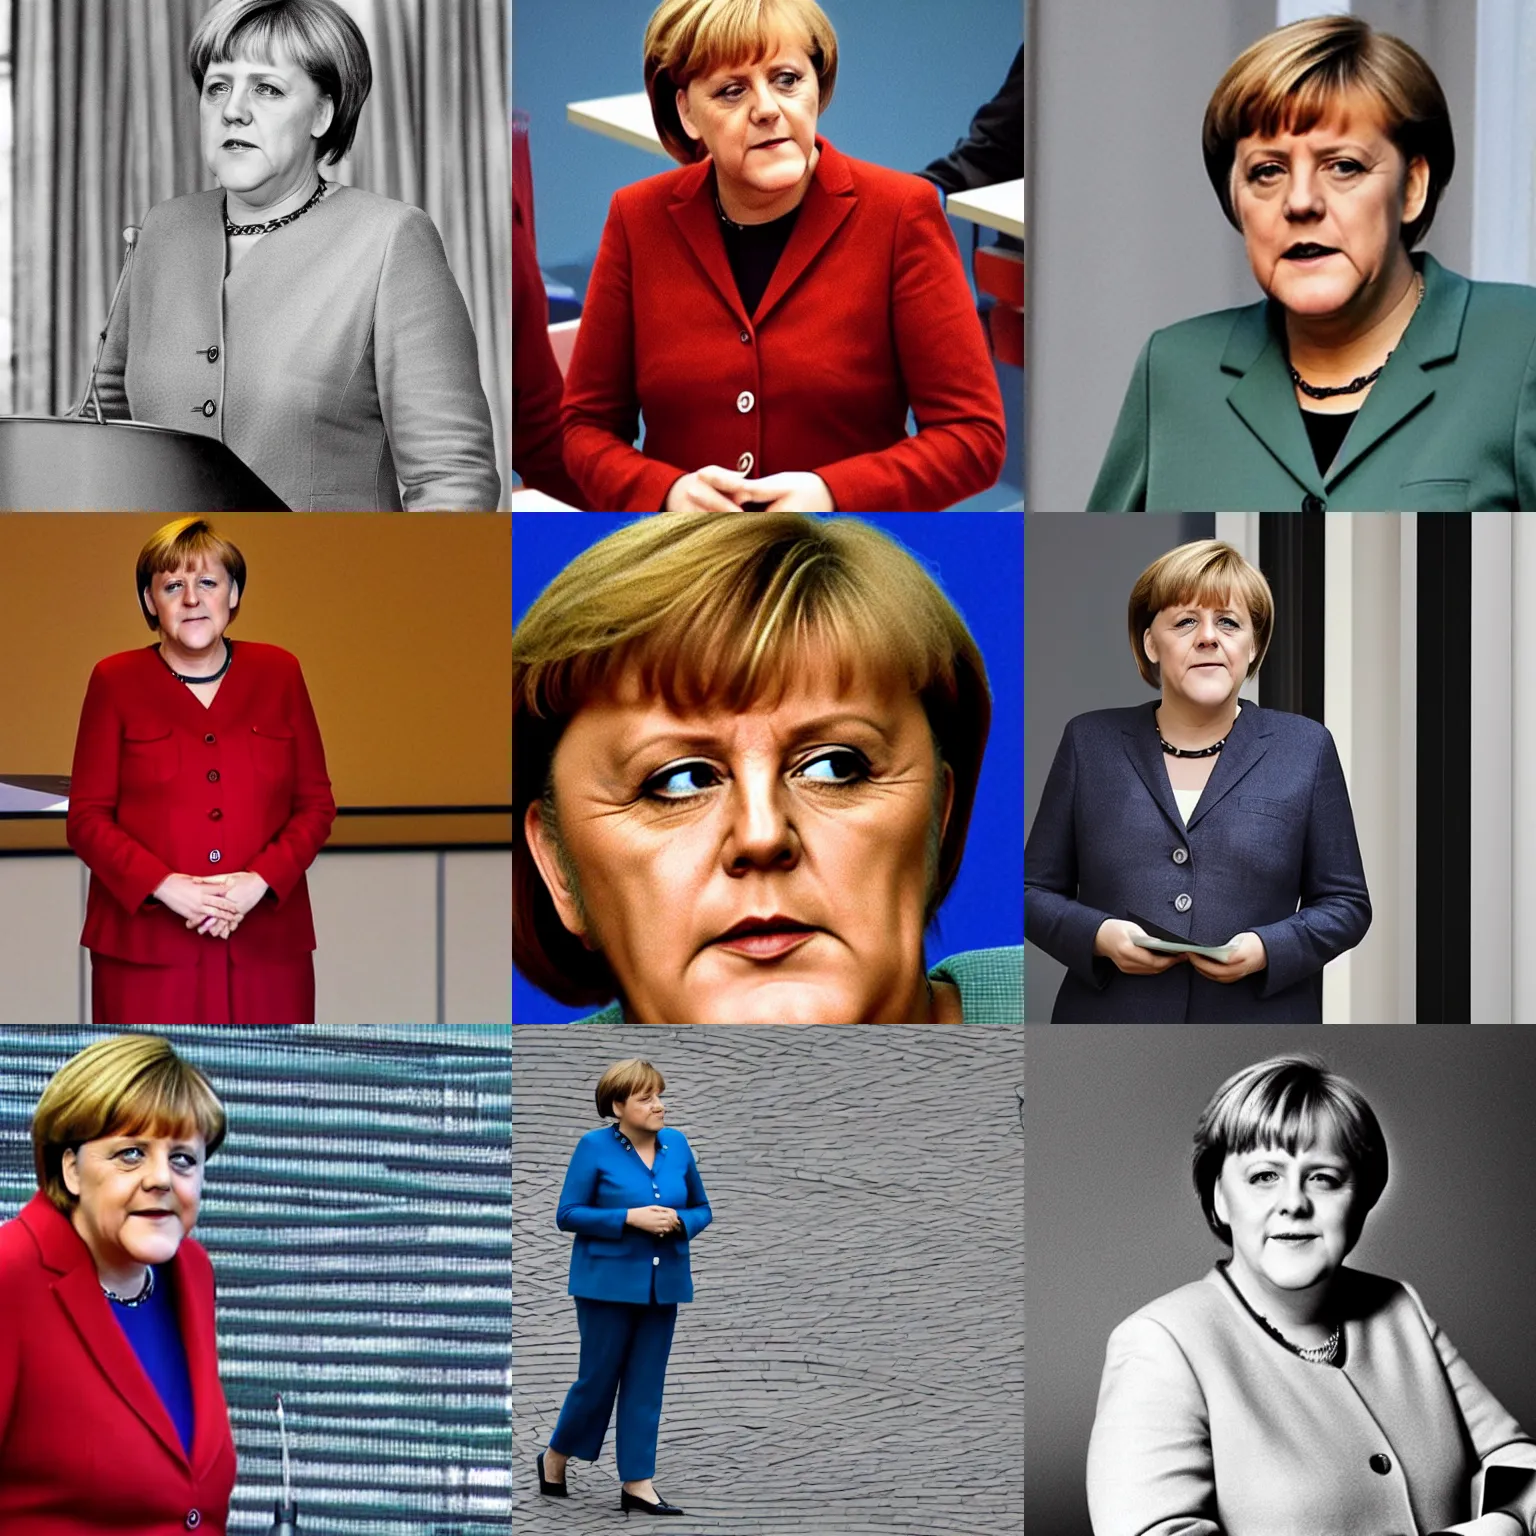 Prompt: Angular Merkel